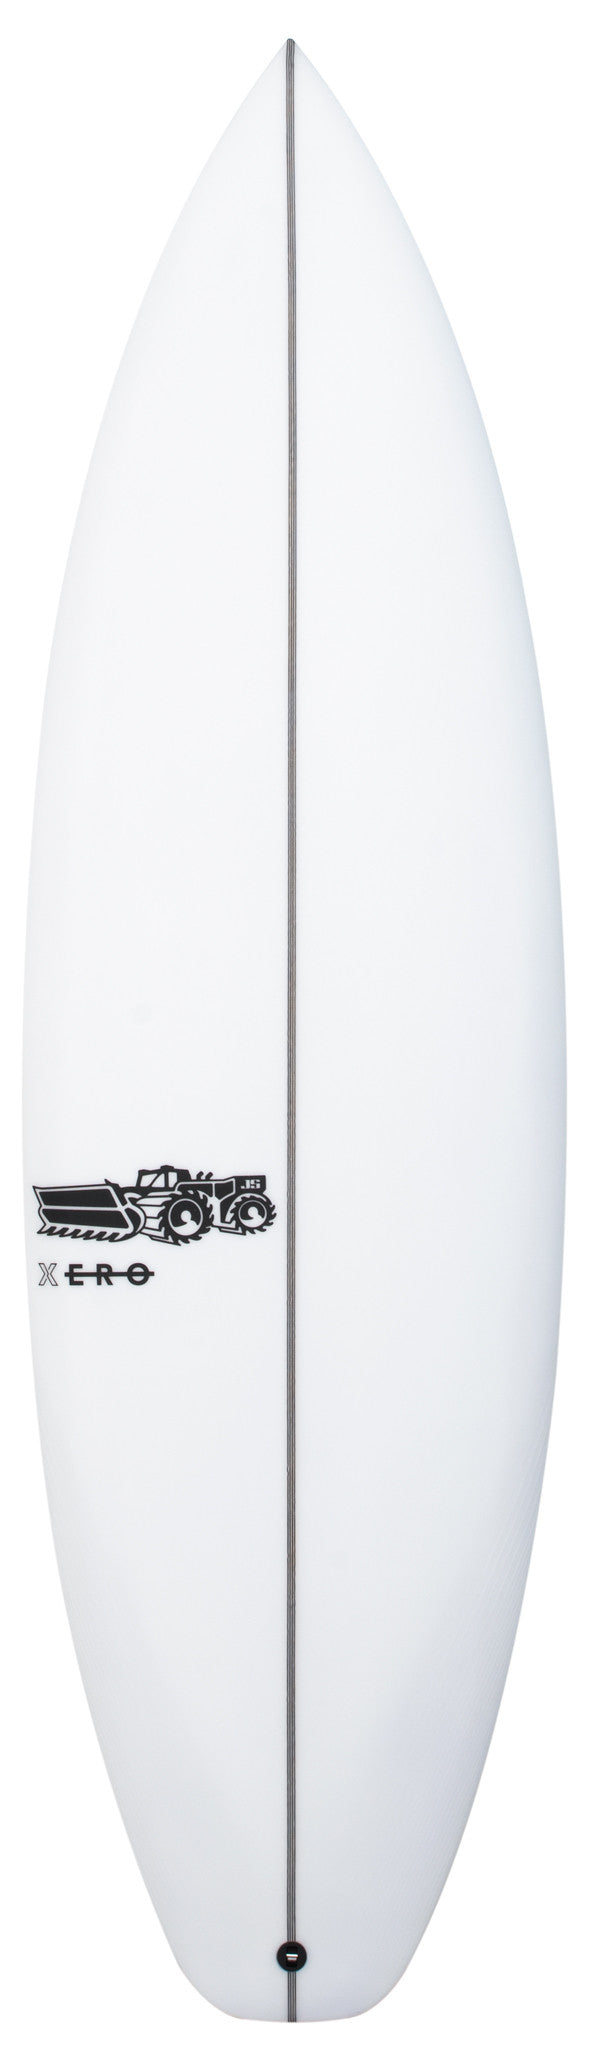 Xero Easy Rider 5'6" x 19 1/8" X  2 3/8" - 26.50L, Squash, 3x  FCS 2 Fins, HYFI 2.0 - ID:703990